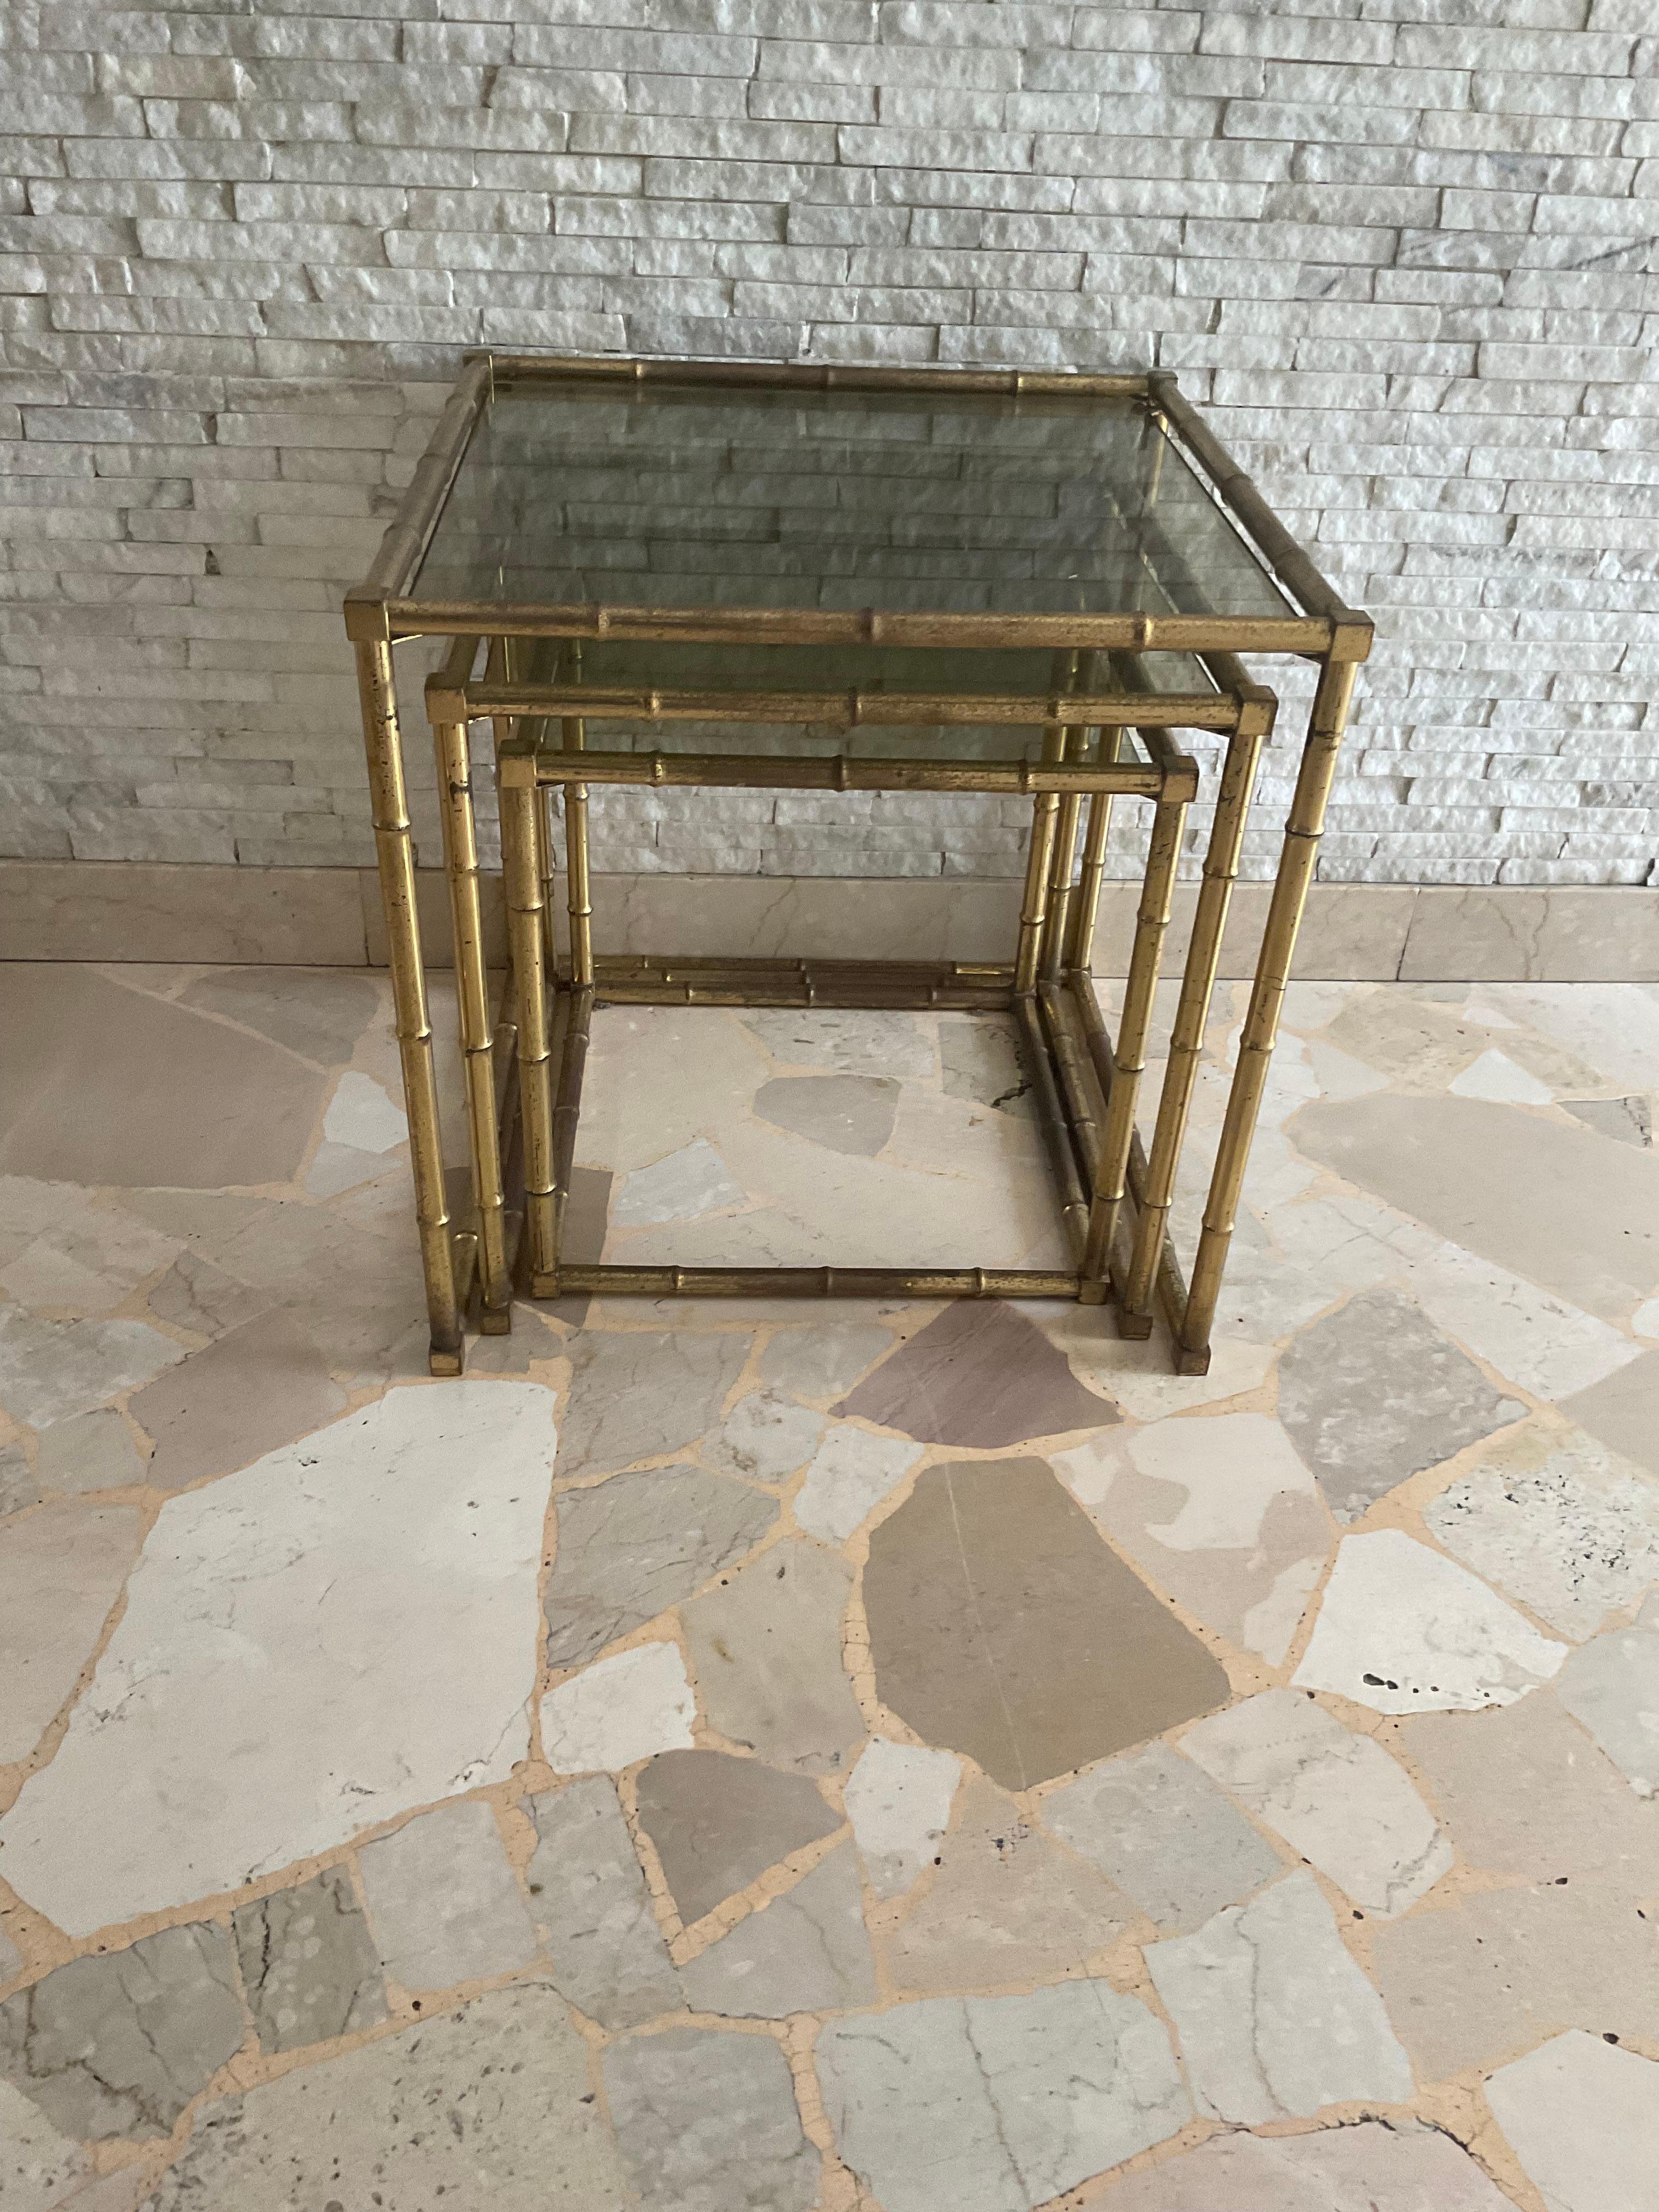 Set of 3 interlocking side tables made of brass with glass top.
Measures:
45 cm x 45 cm x 45 cm
40 cm x 40 cm x 40 cm
35 cm x 35 cm x 35 cm